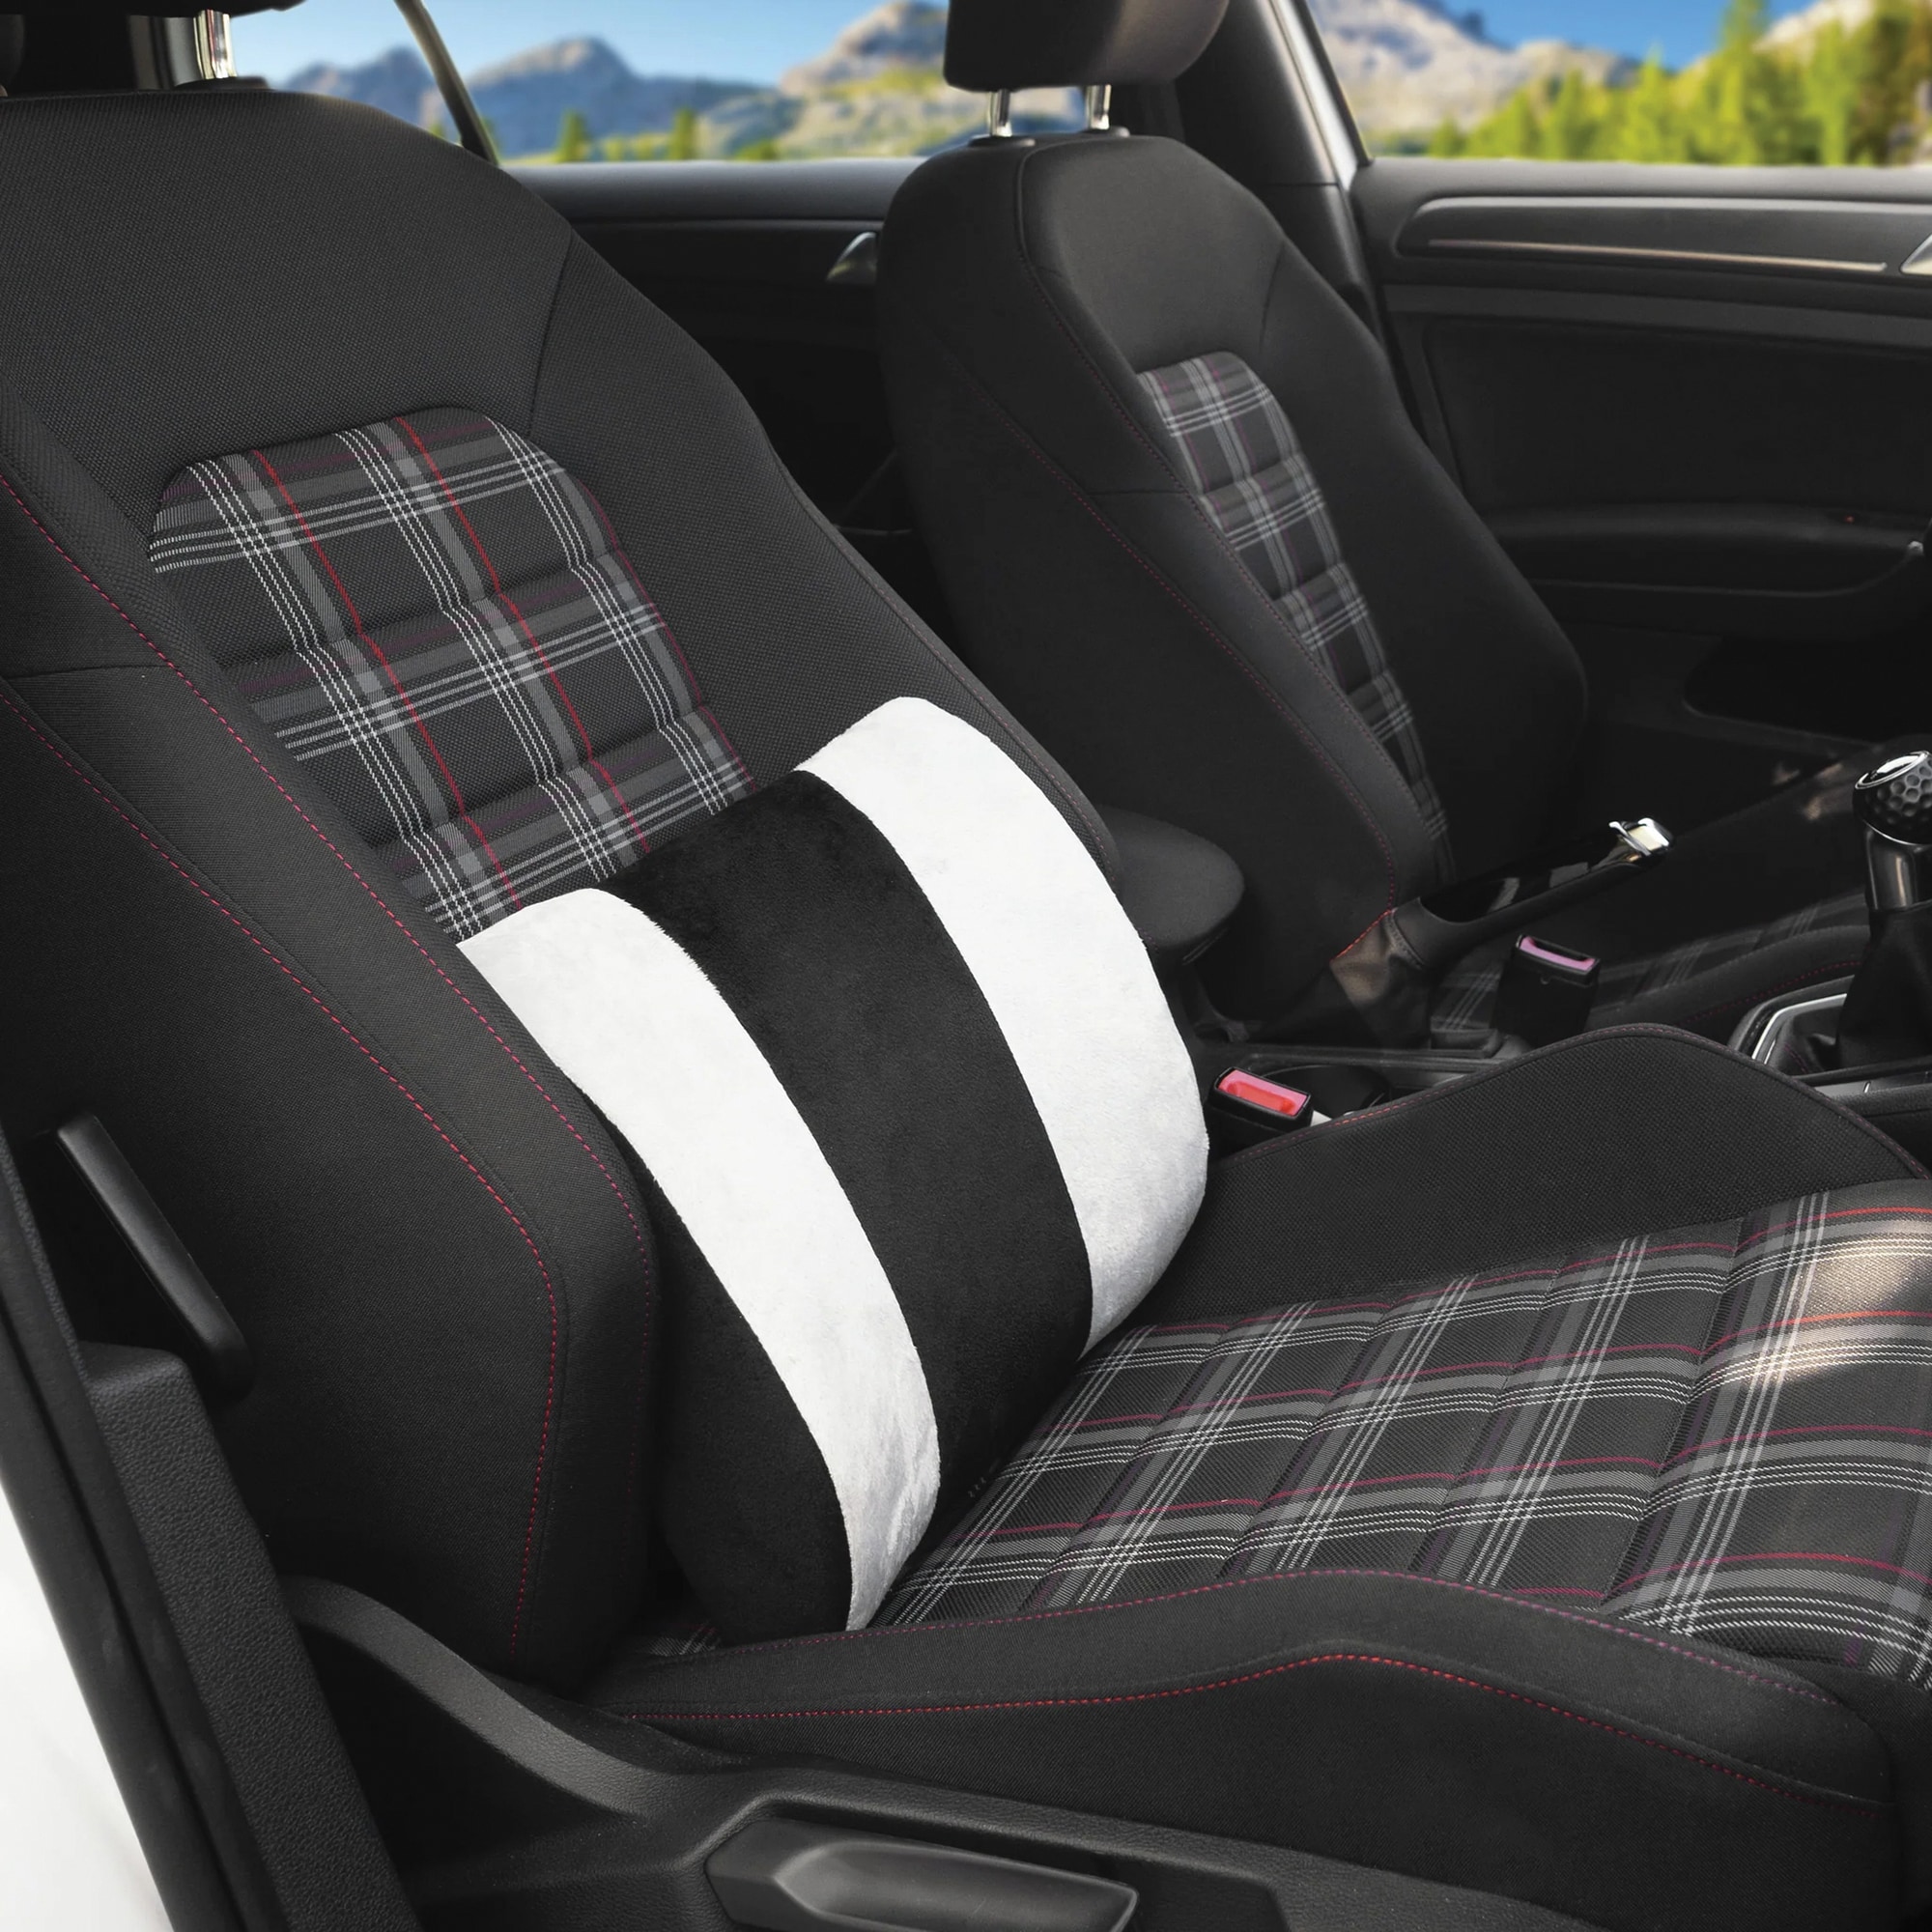 HealthMate Black Polyester Car Seat Cushion - 12-Volt Heated